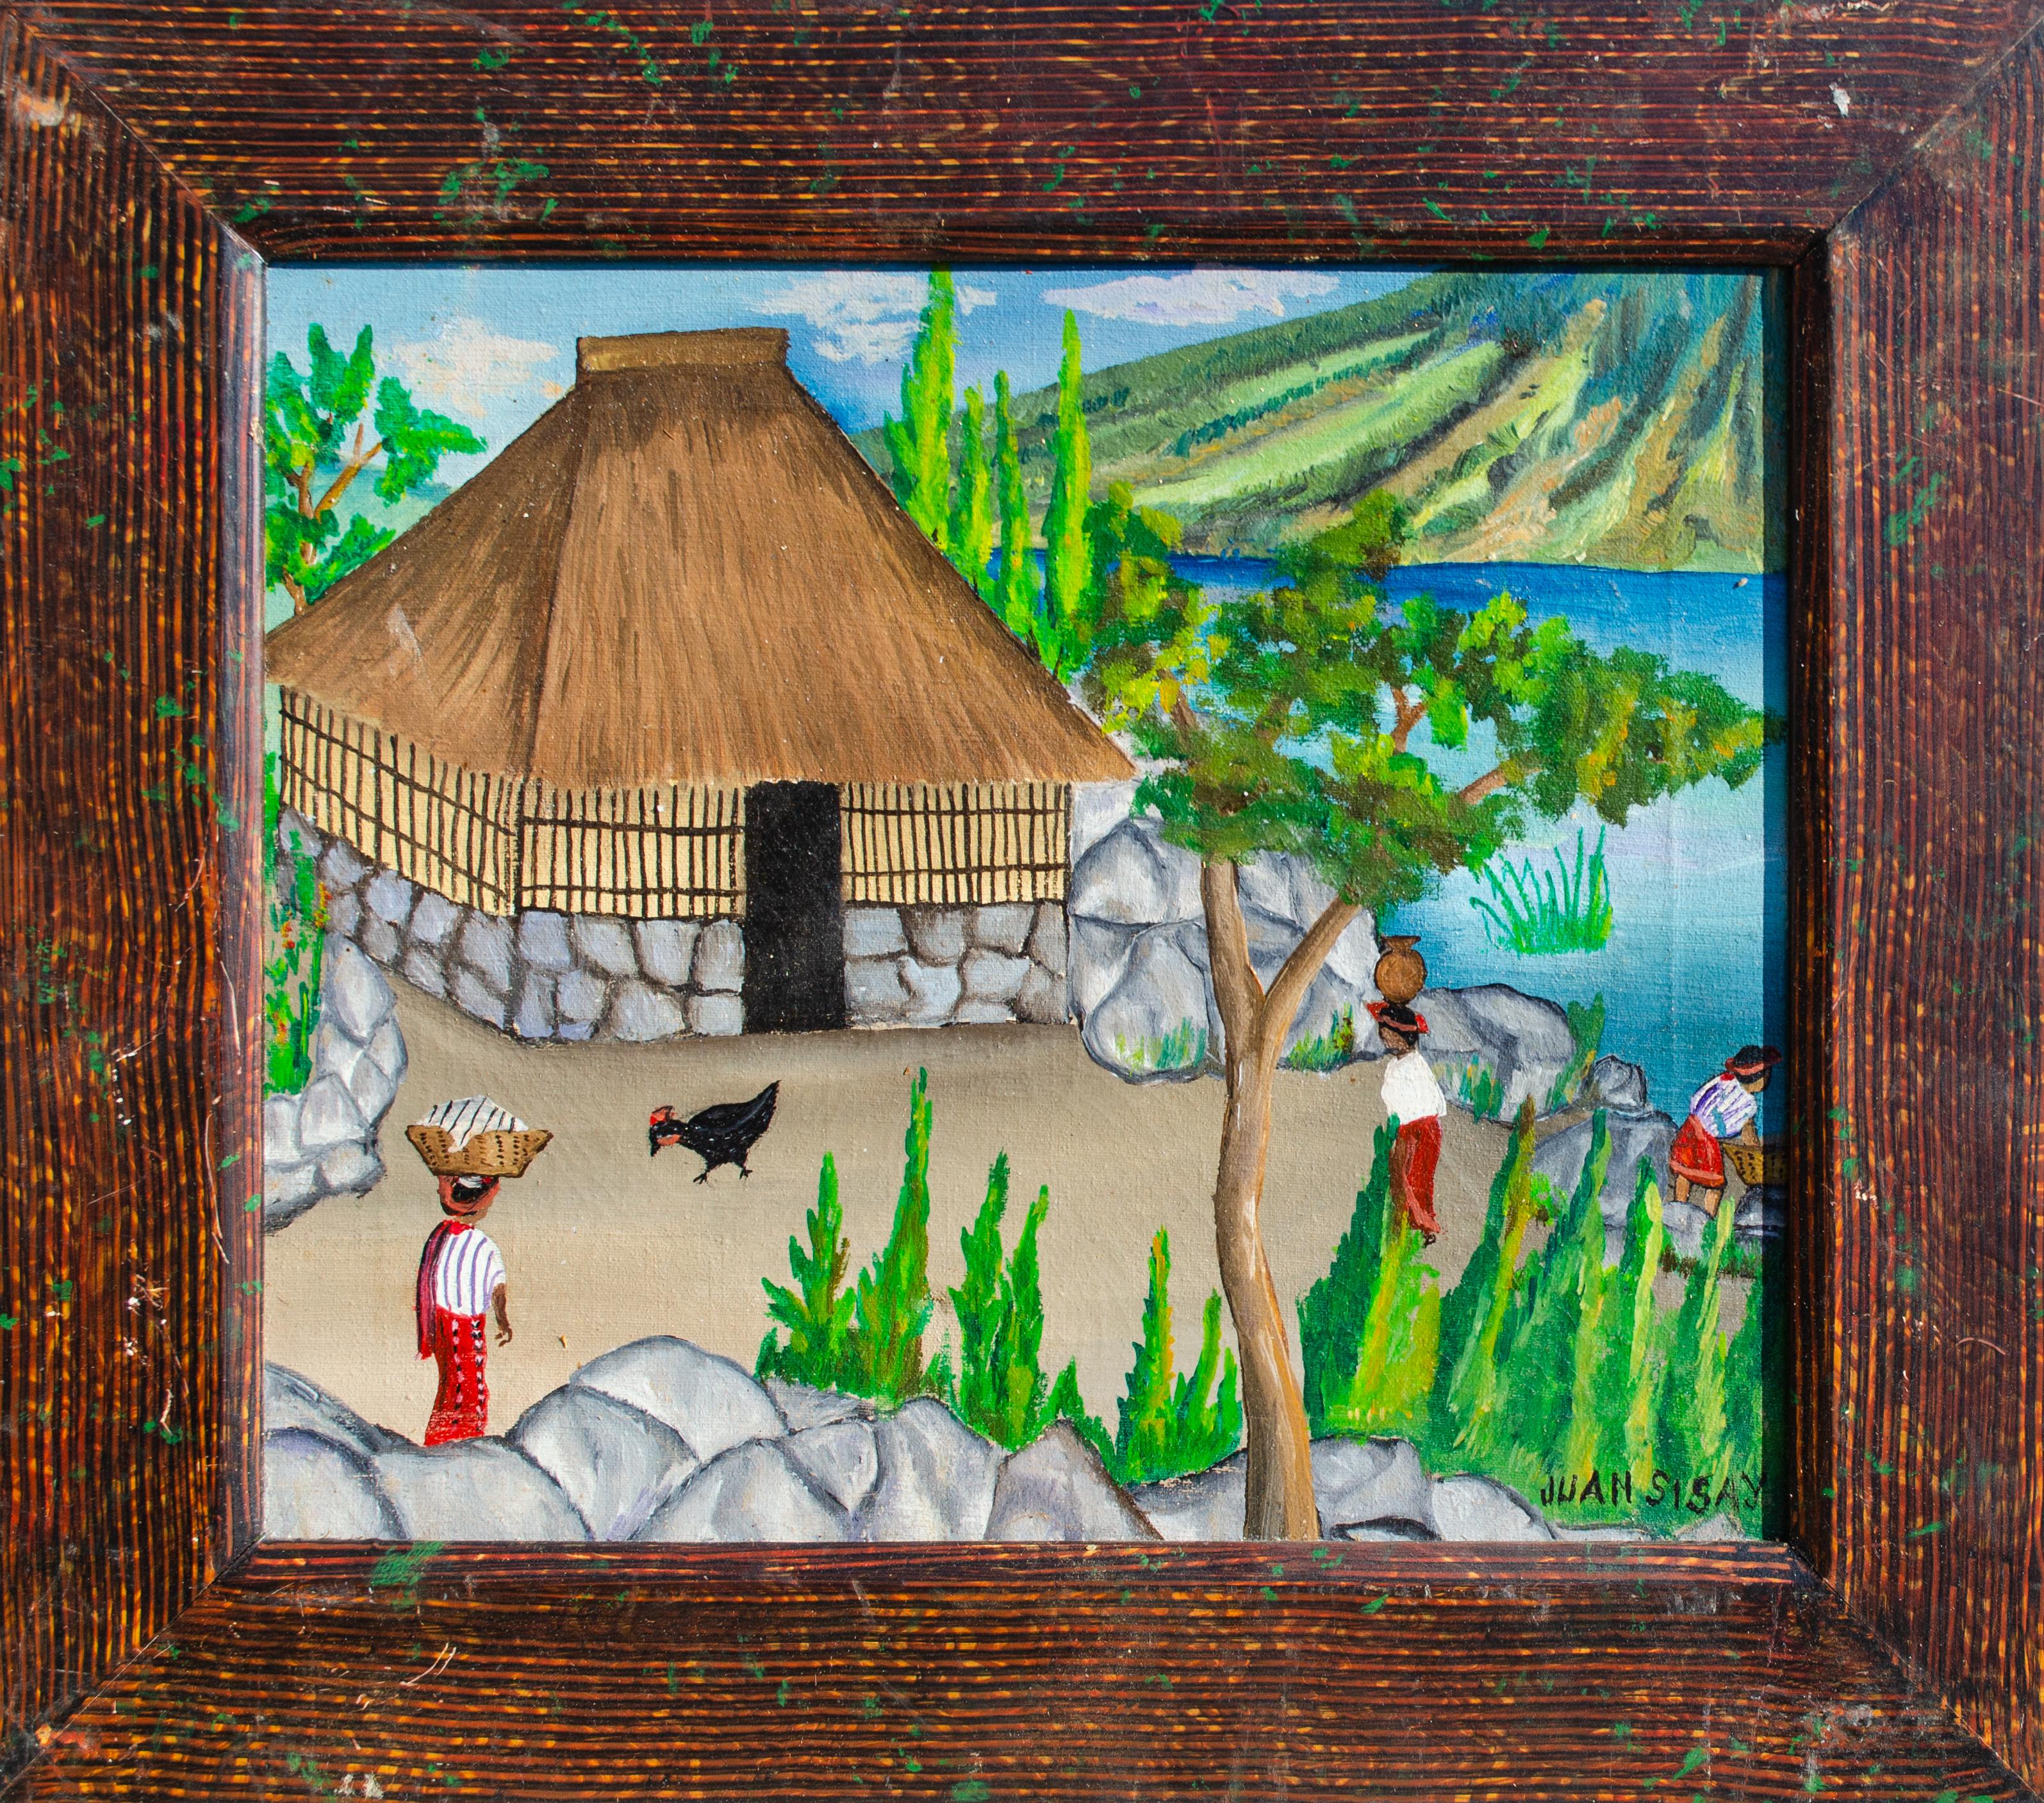 Folk Painting of Guatemala by Juan Sisay, Signed